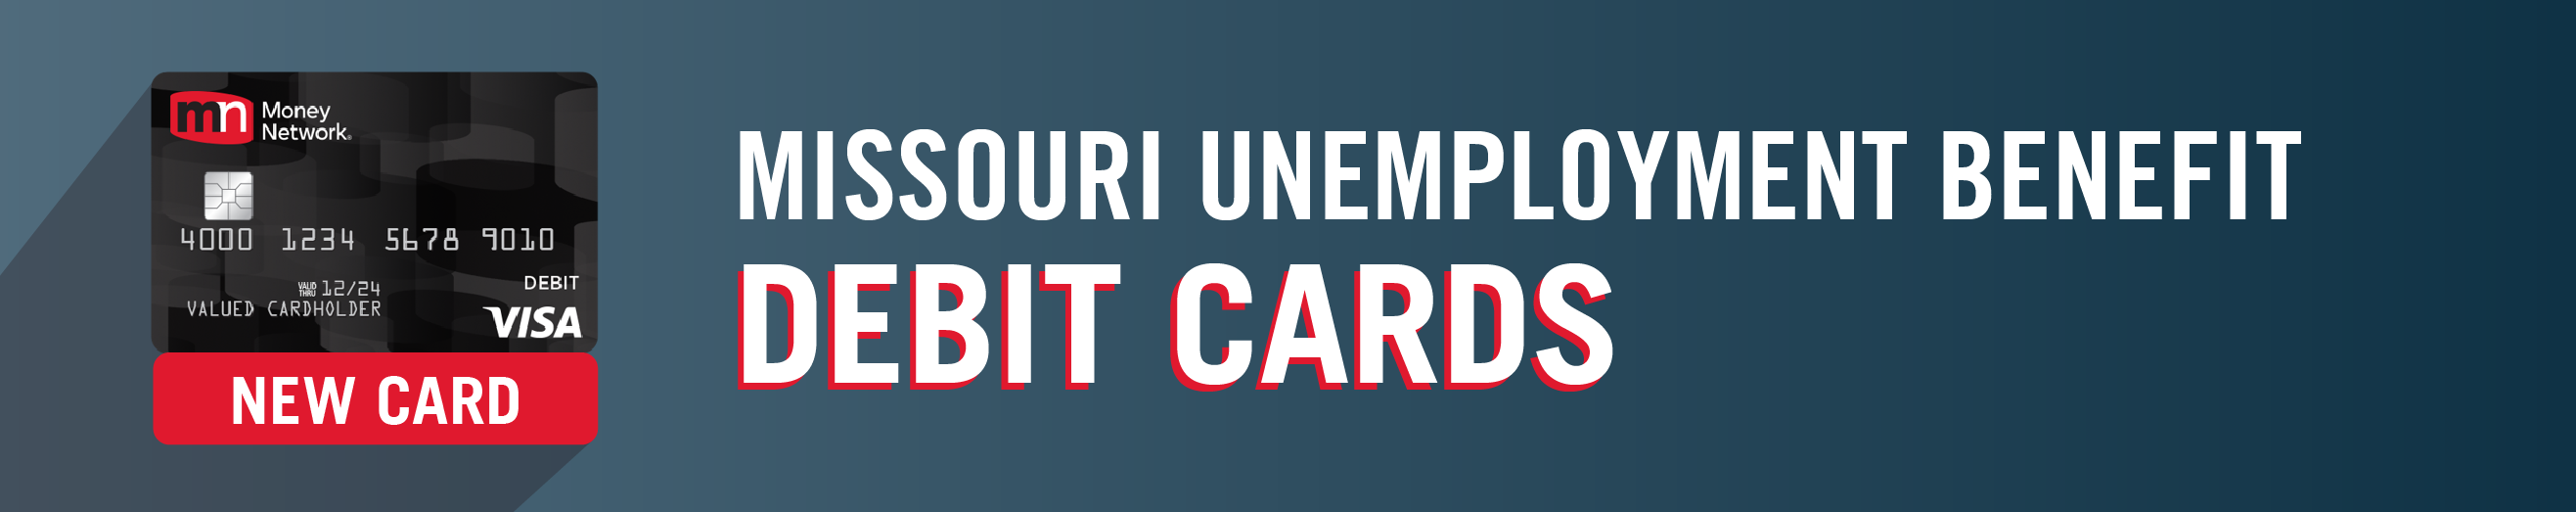 Missouri Unemployment Benefit Debit Cards